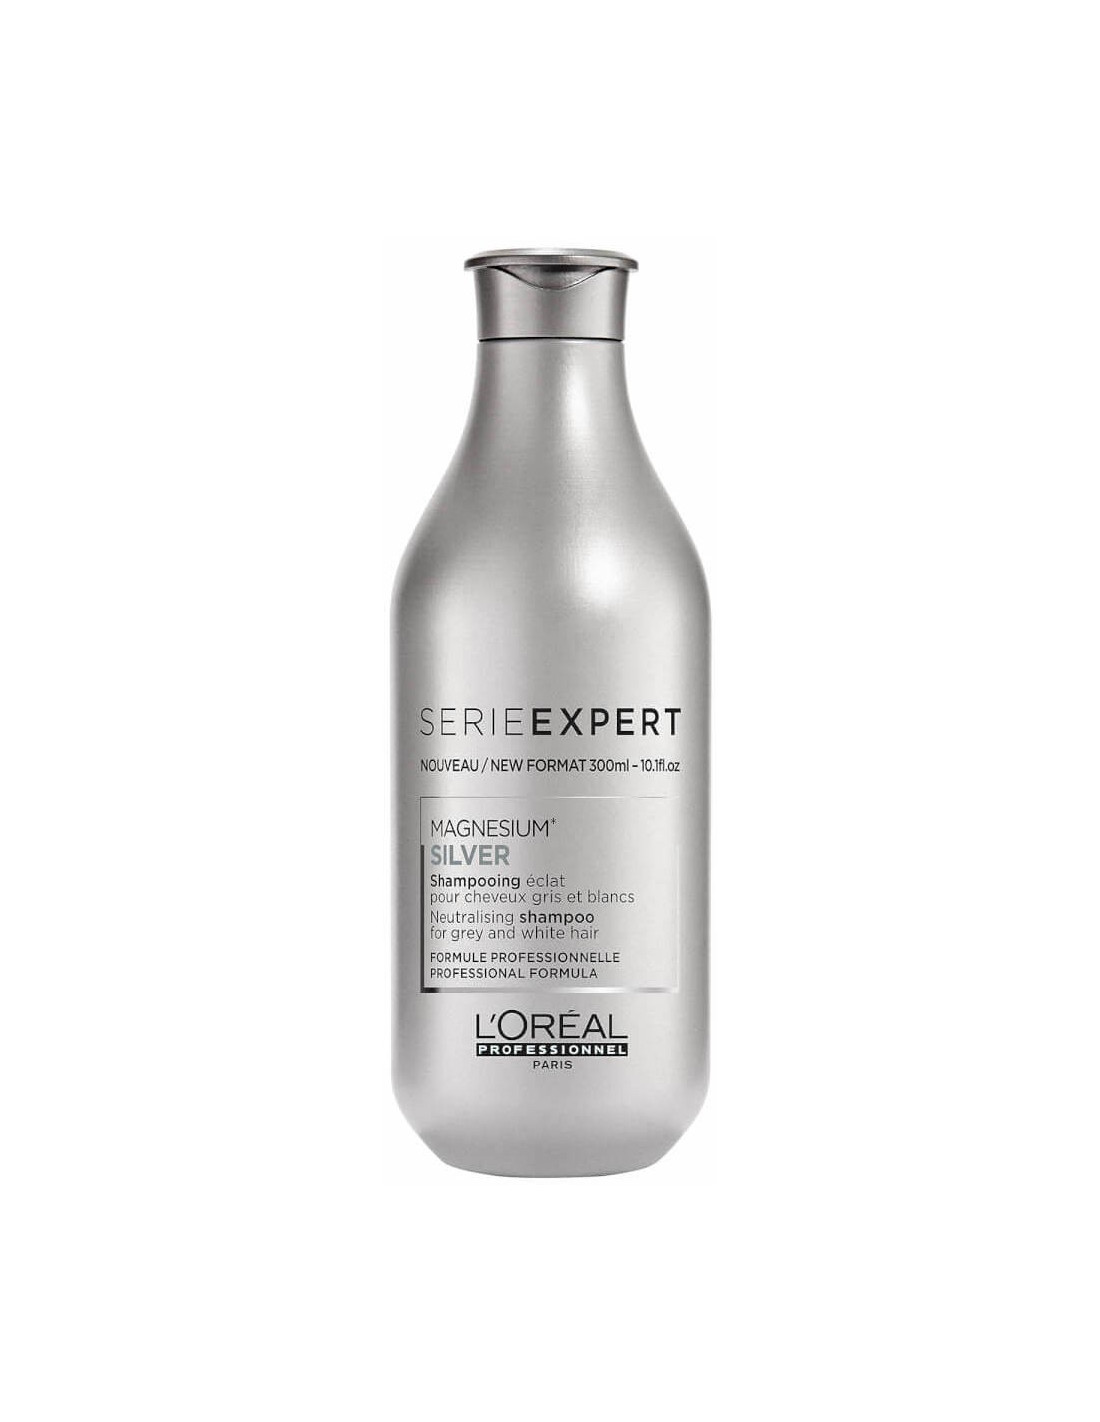 silver szampon loreal